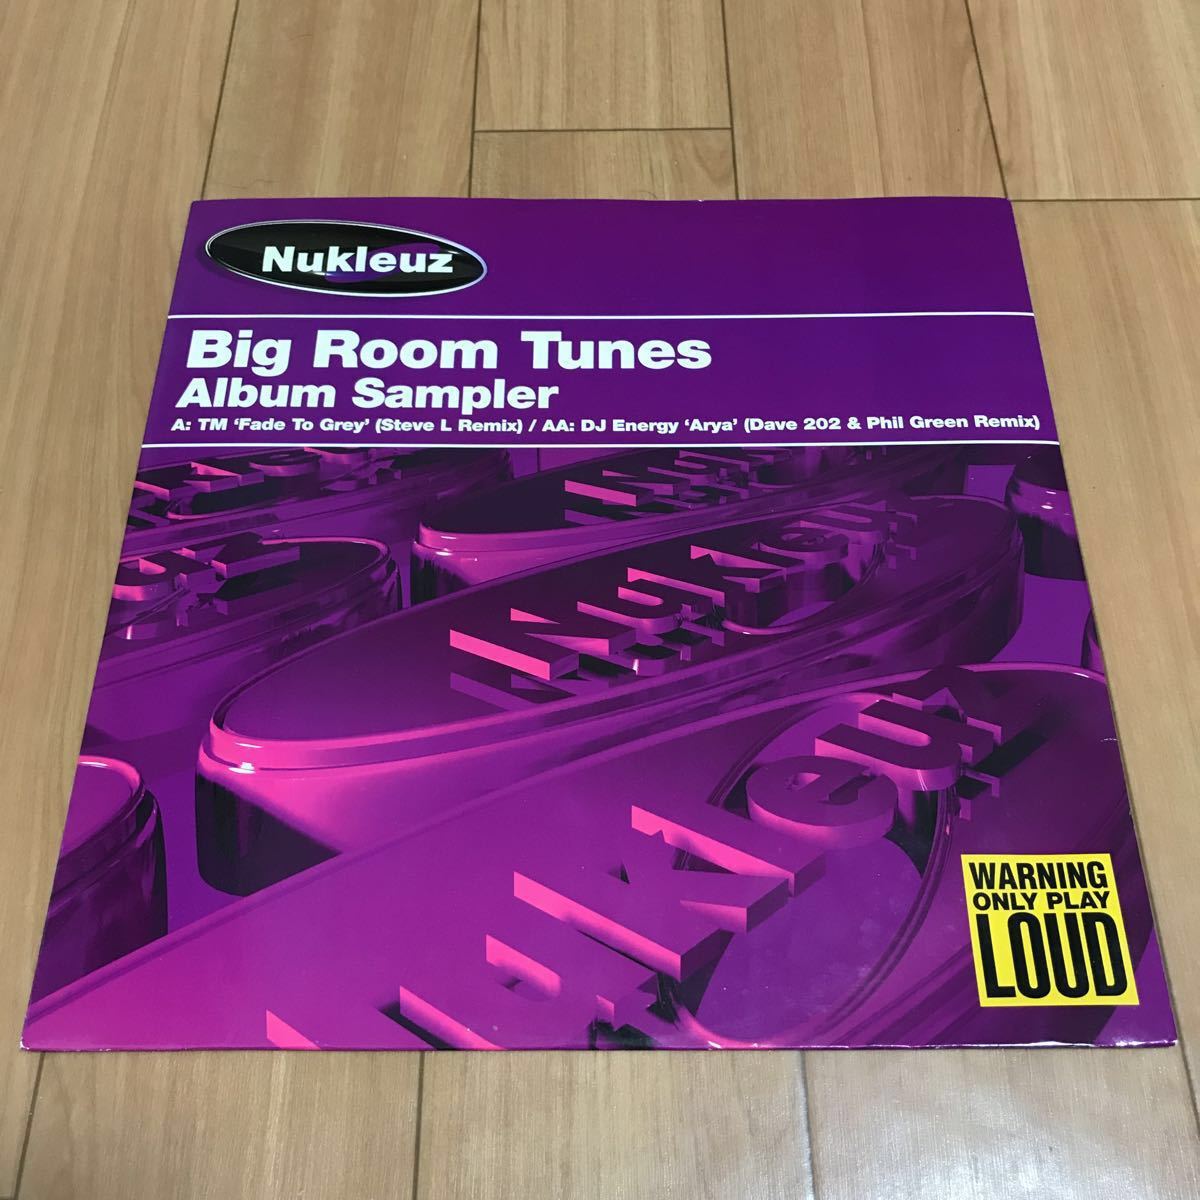 V.A. / Big Room Tunes Album Sampler - Nukleuz Records. DJ Energy. Dave 202